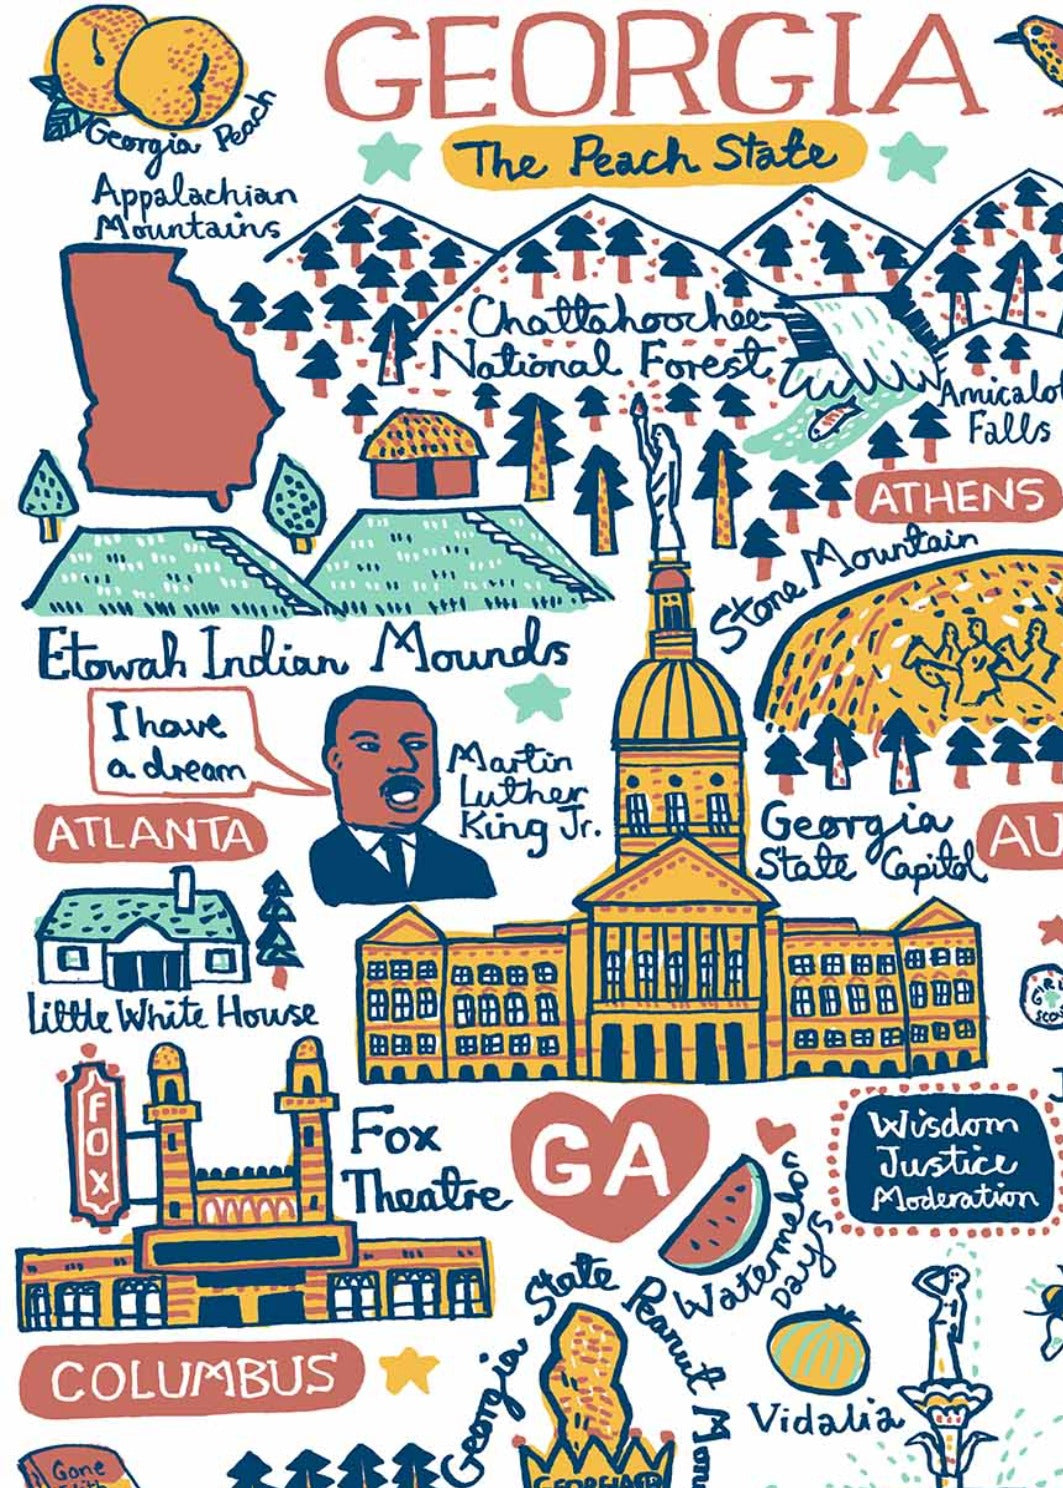 Georgia Card by Julia Gash